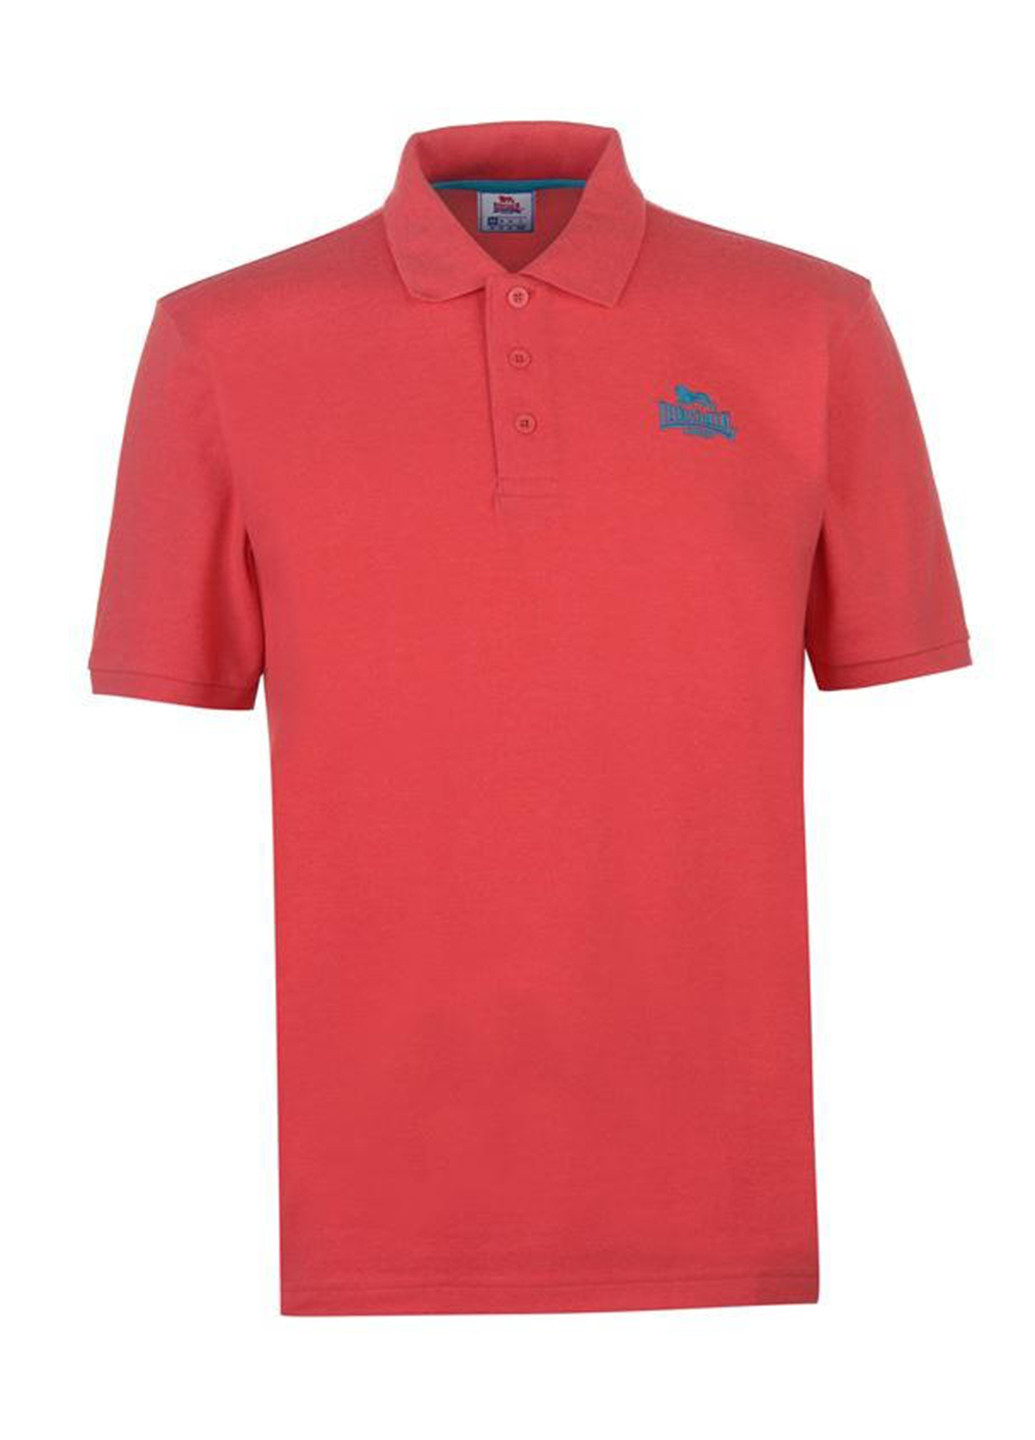 Бледно-красная футболка-поло для мужчин Lonsdale с логотипом